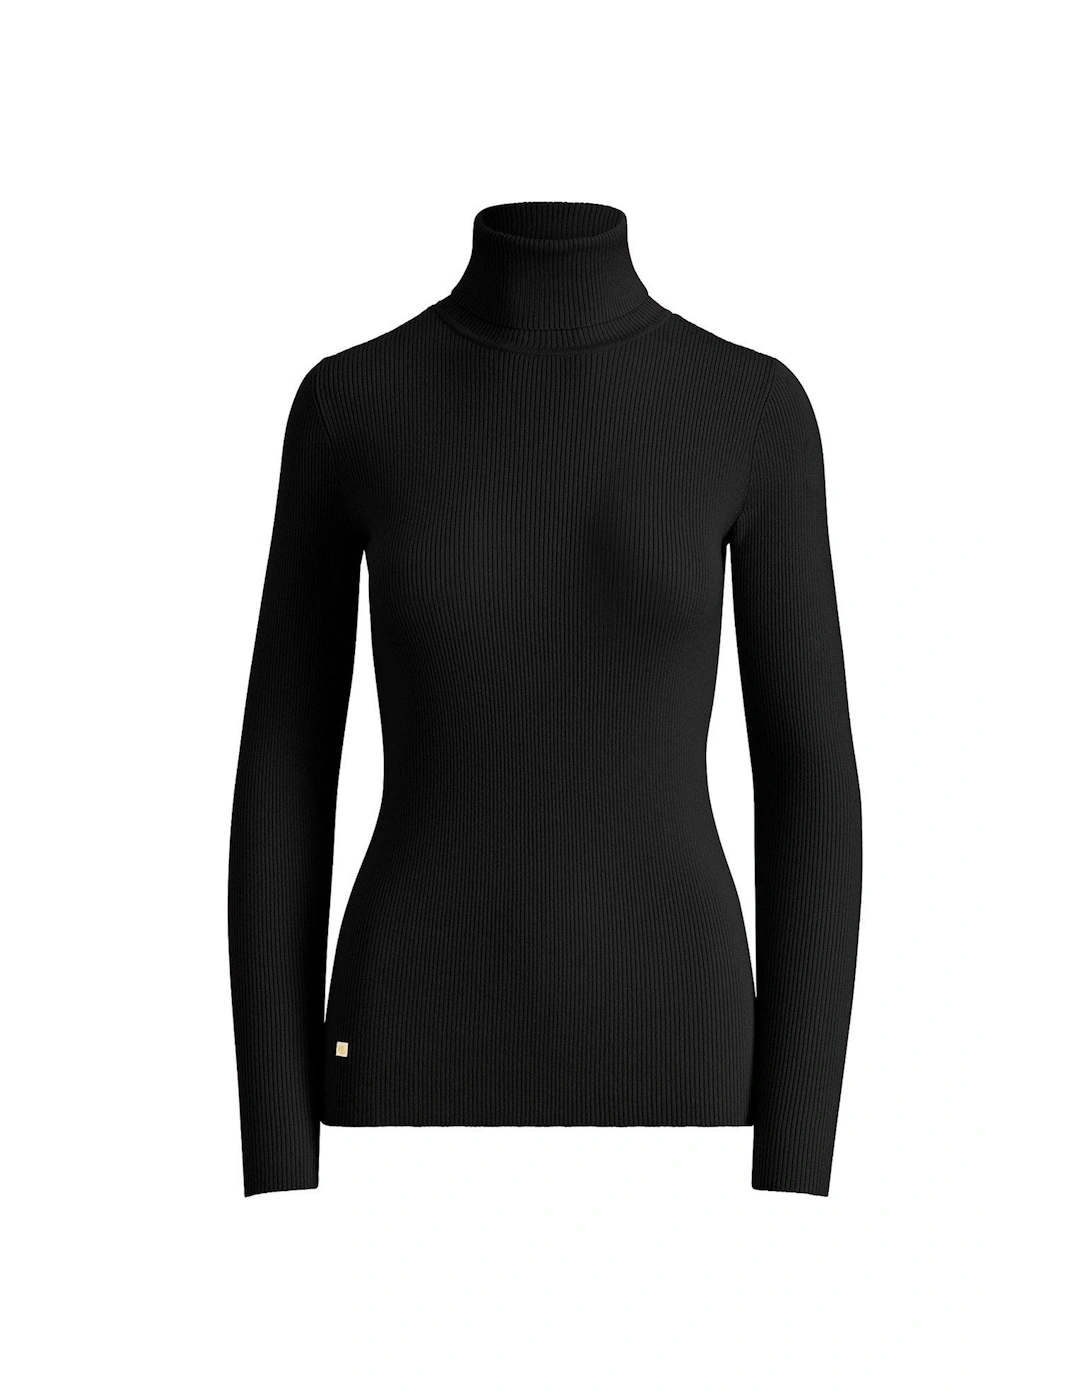 Amanda-long Sleeve-sweater - Polo Black